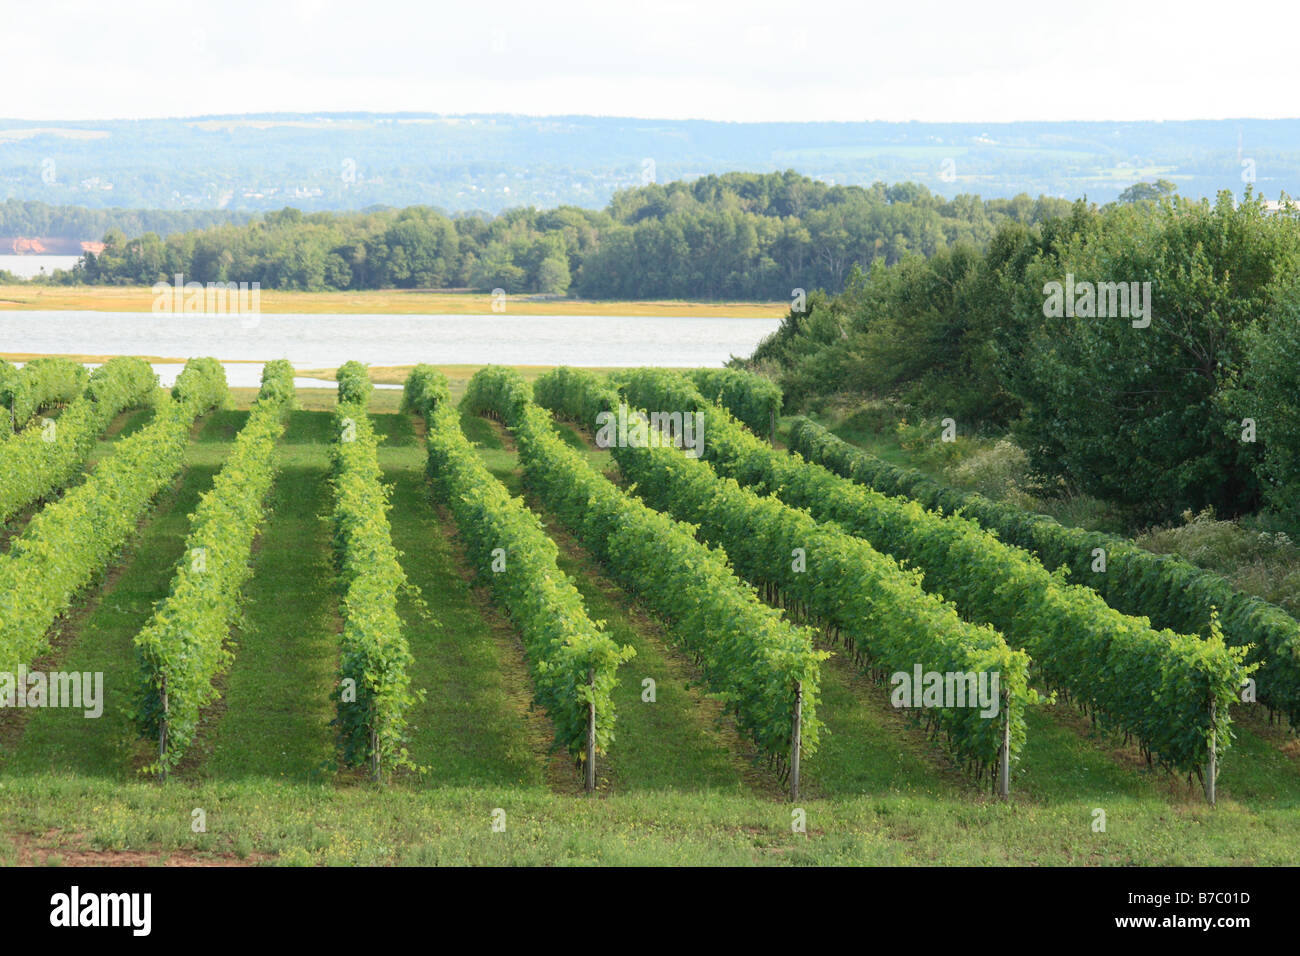 a vineyard in the Annapolis valley, Nova Scotia, Canada Stock Photo